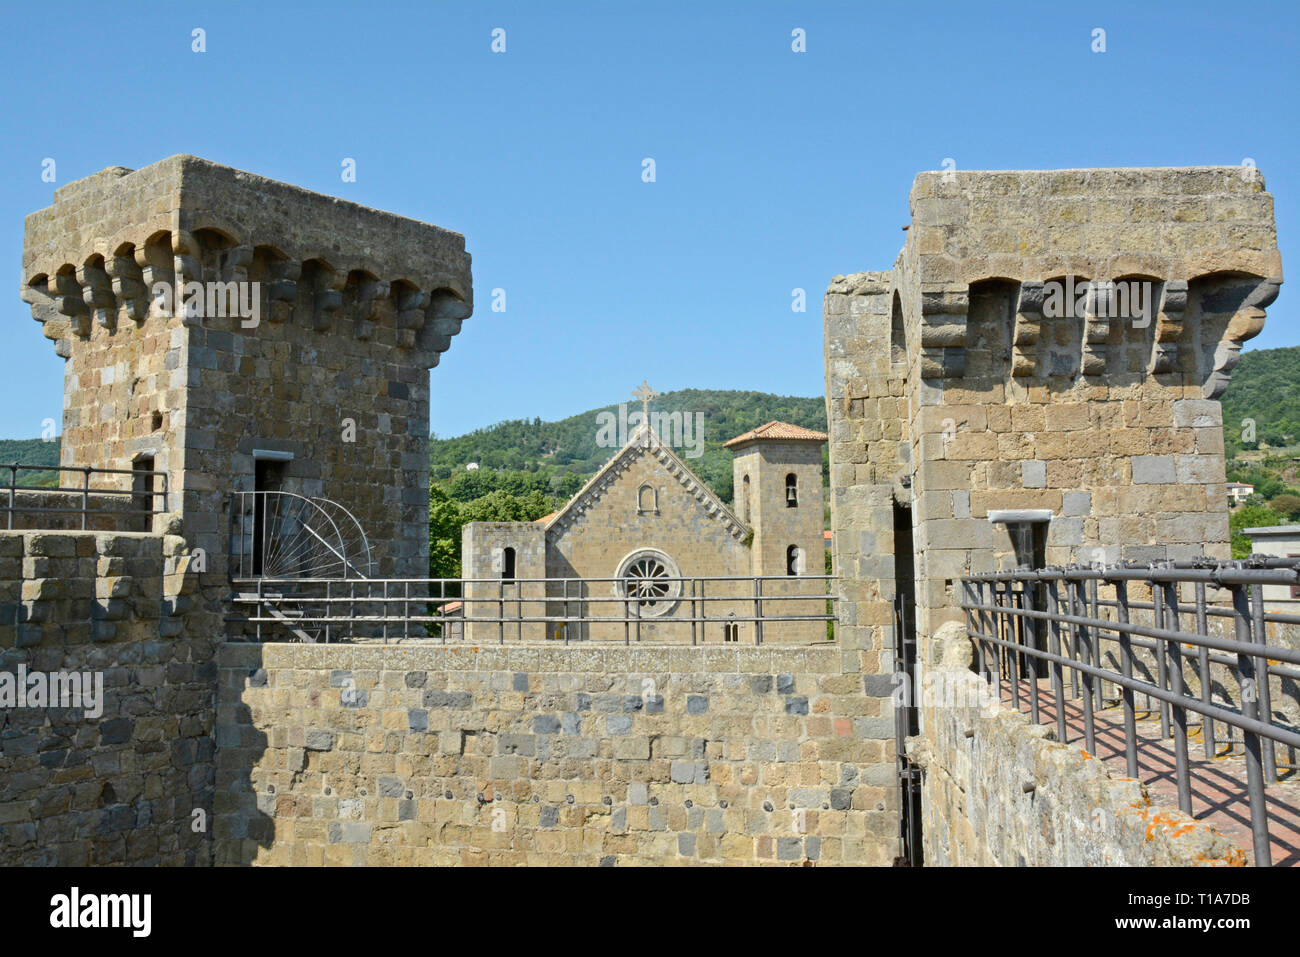 Castle in the town of Bolsena in Lazio, Italy Stock Photo